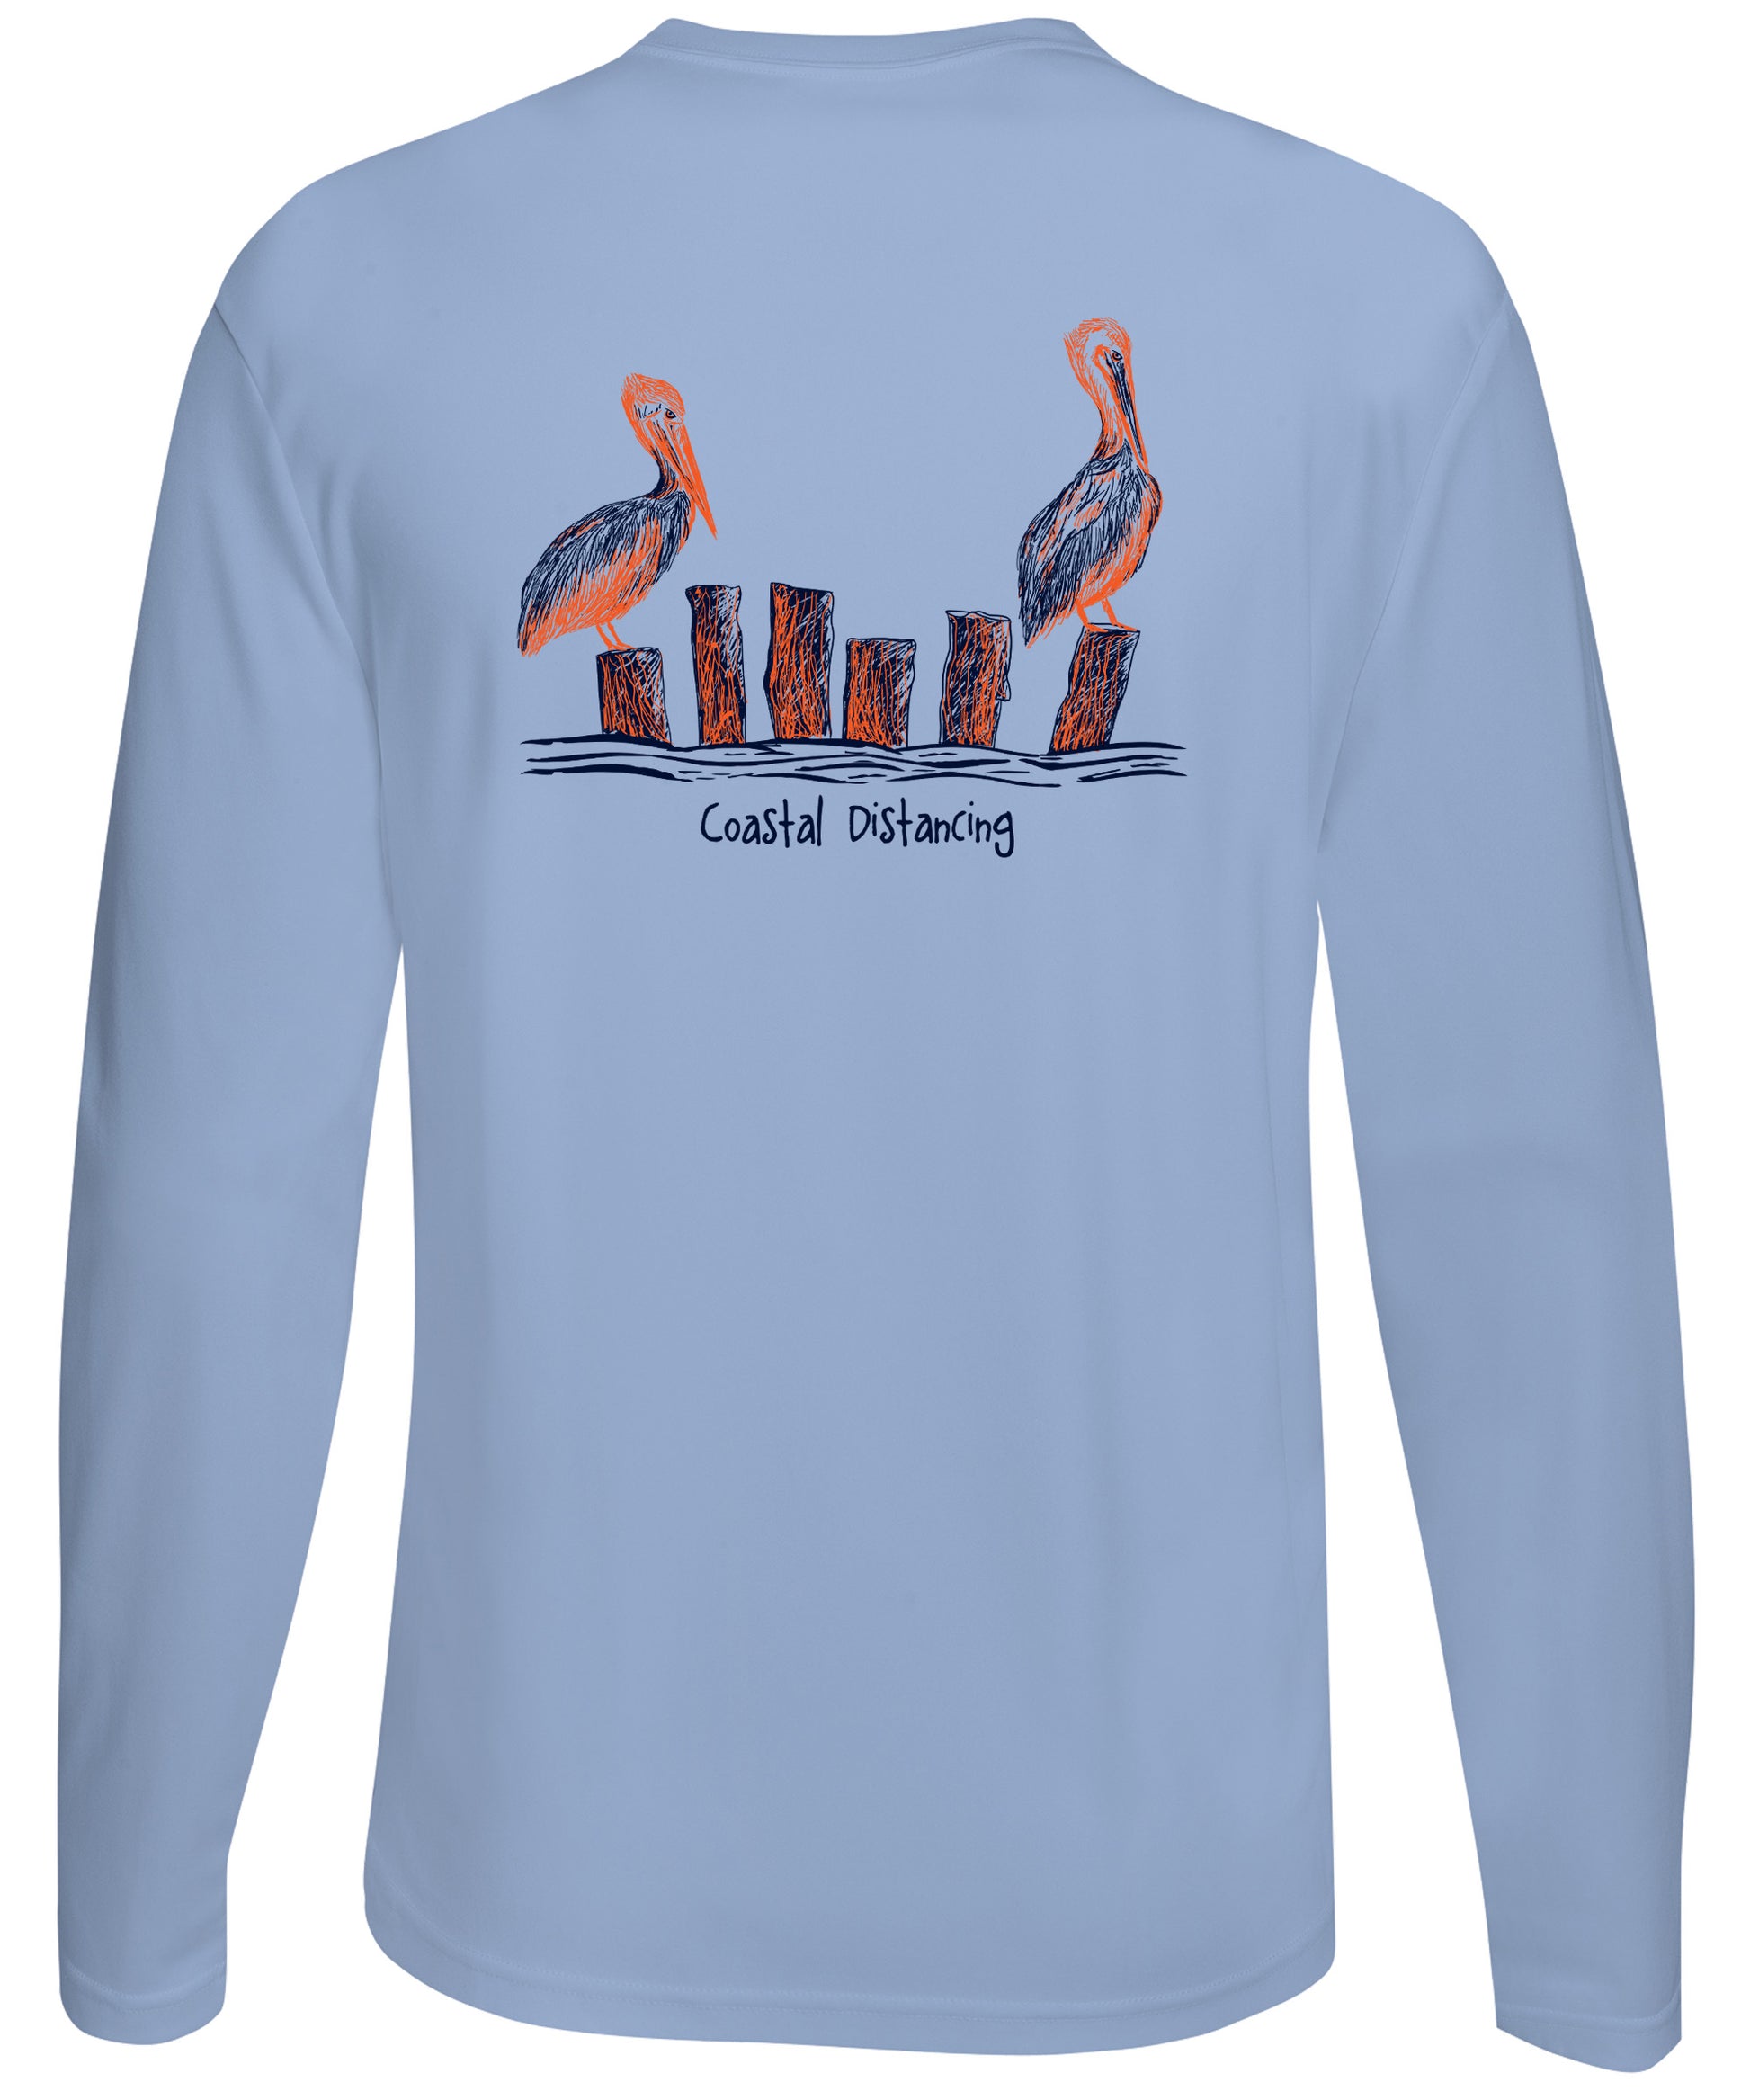 Pelicans Coastal Distancing Performance Dry-fit Lt. Blue Long Sleeve Shirts